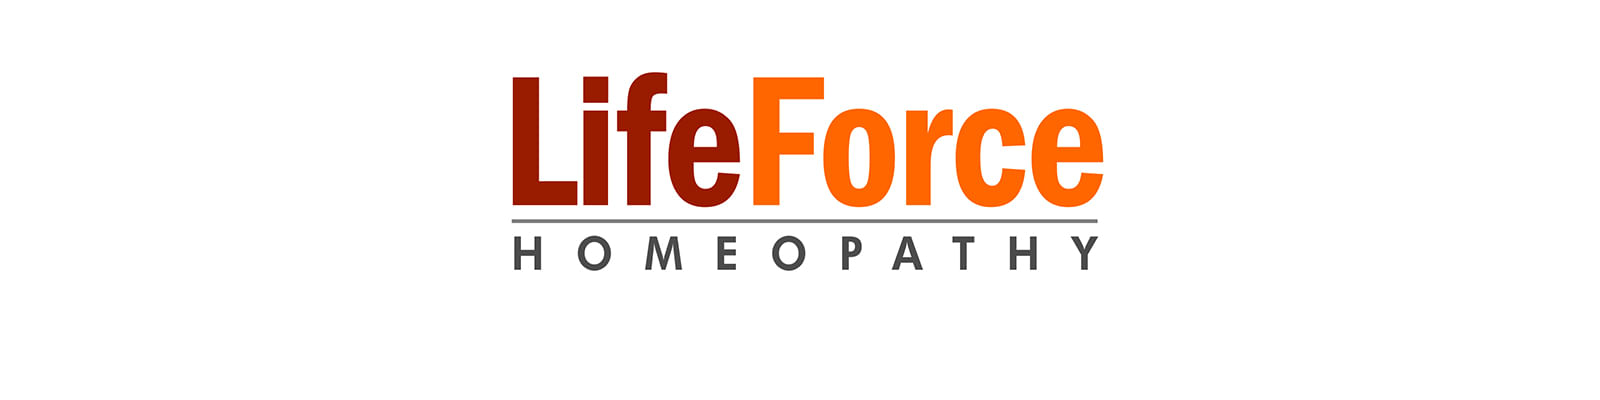 Life Force Homeopathy - Santacruz